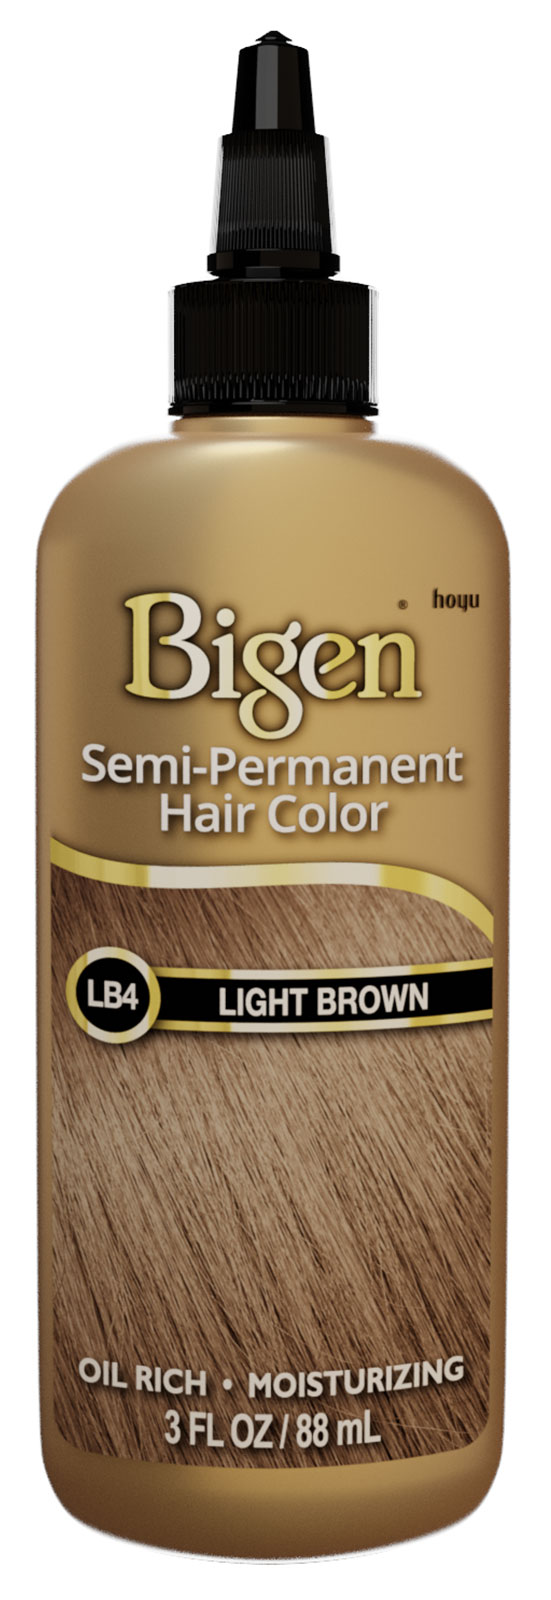 LB4-Light Brown